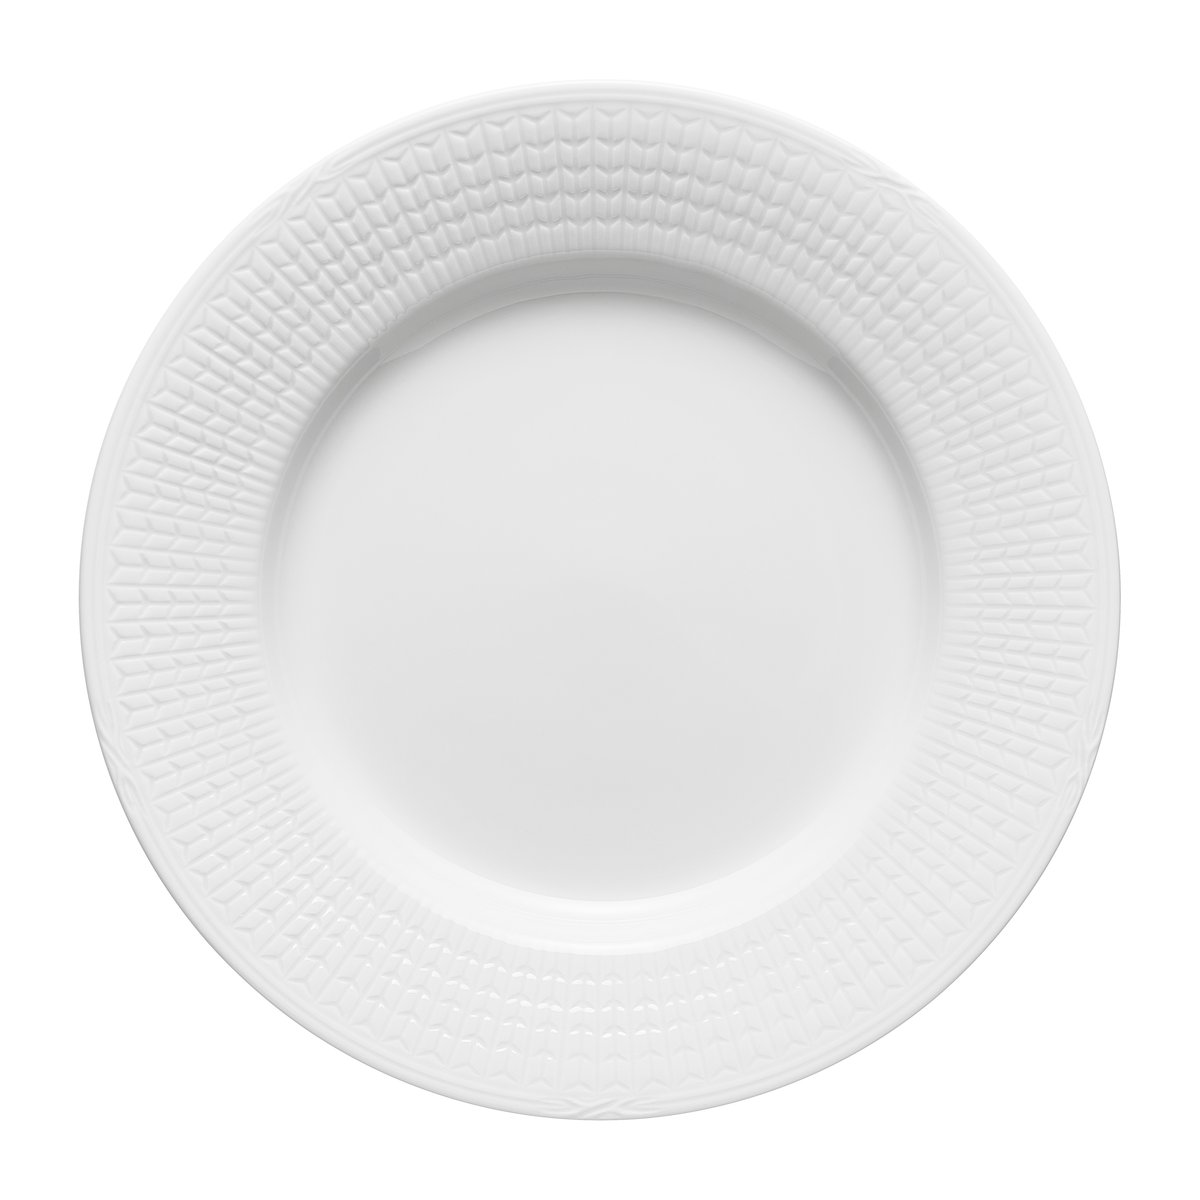 rörstrand assiette swedish grace ø24 cm neige (blanc)